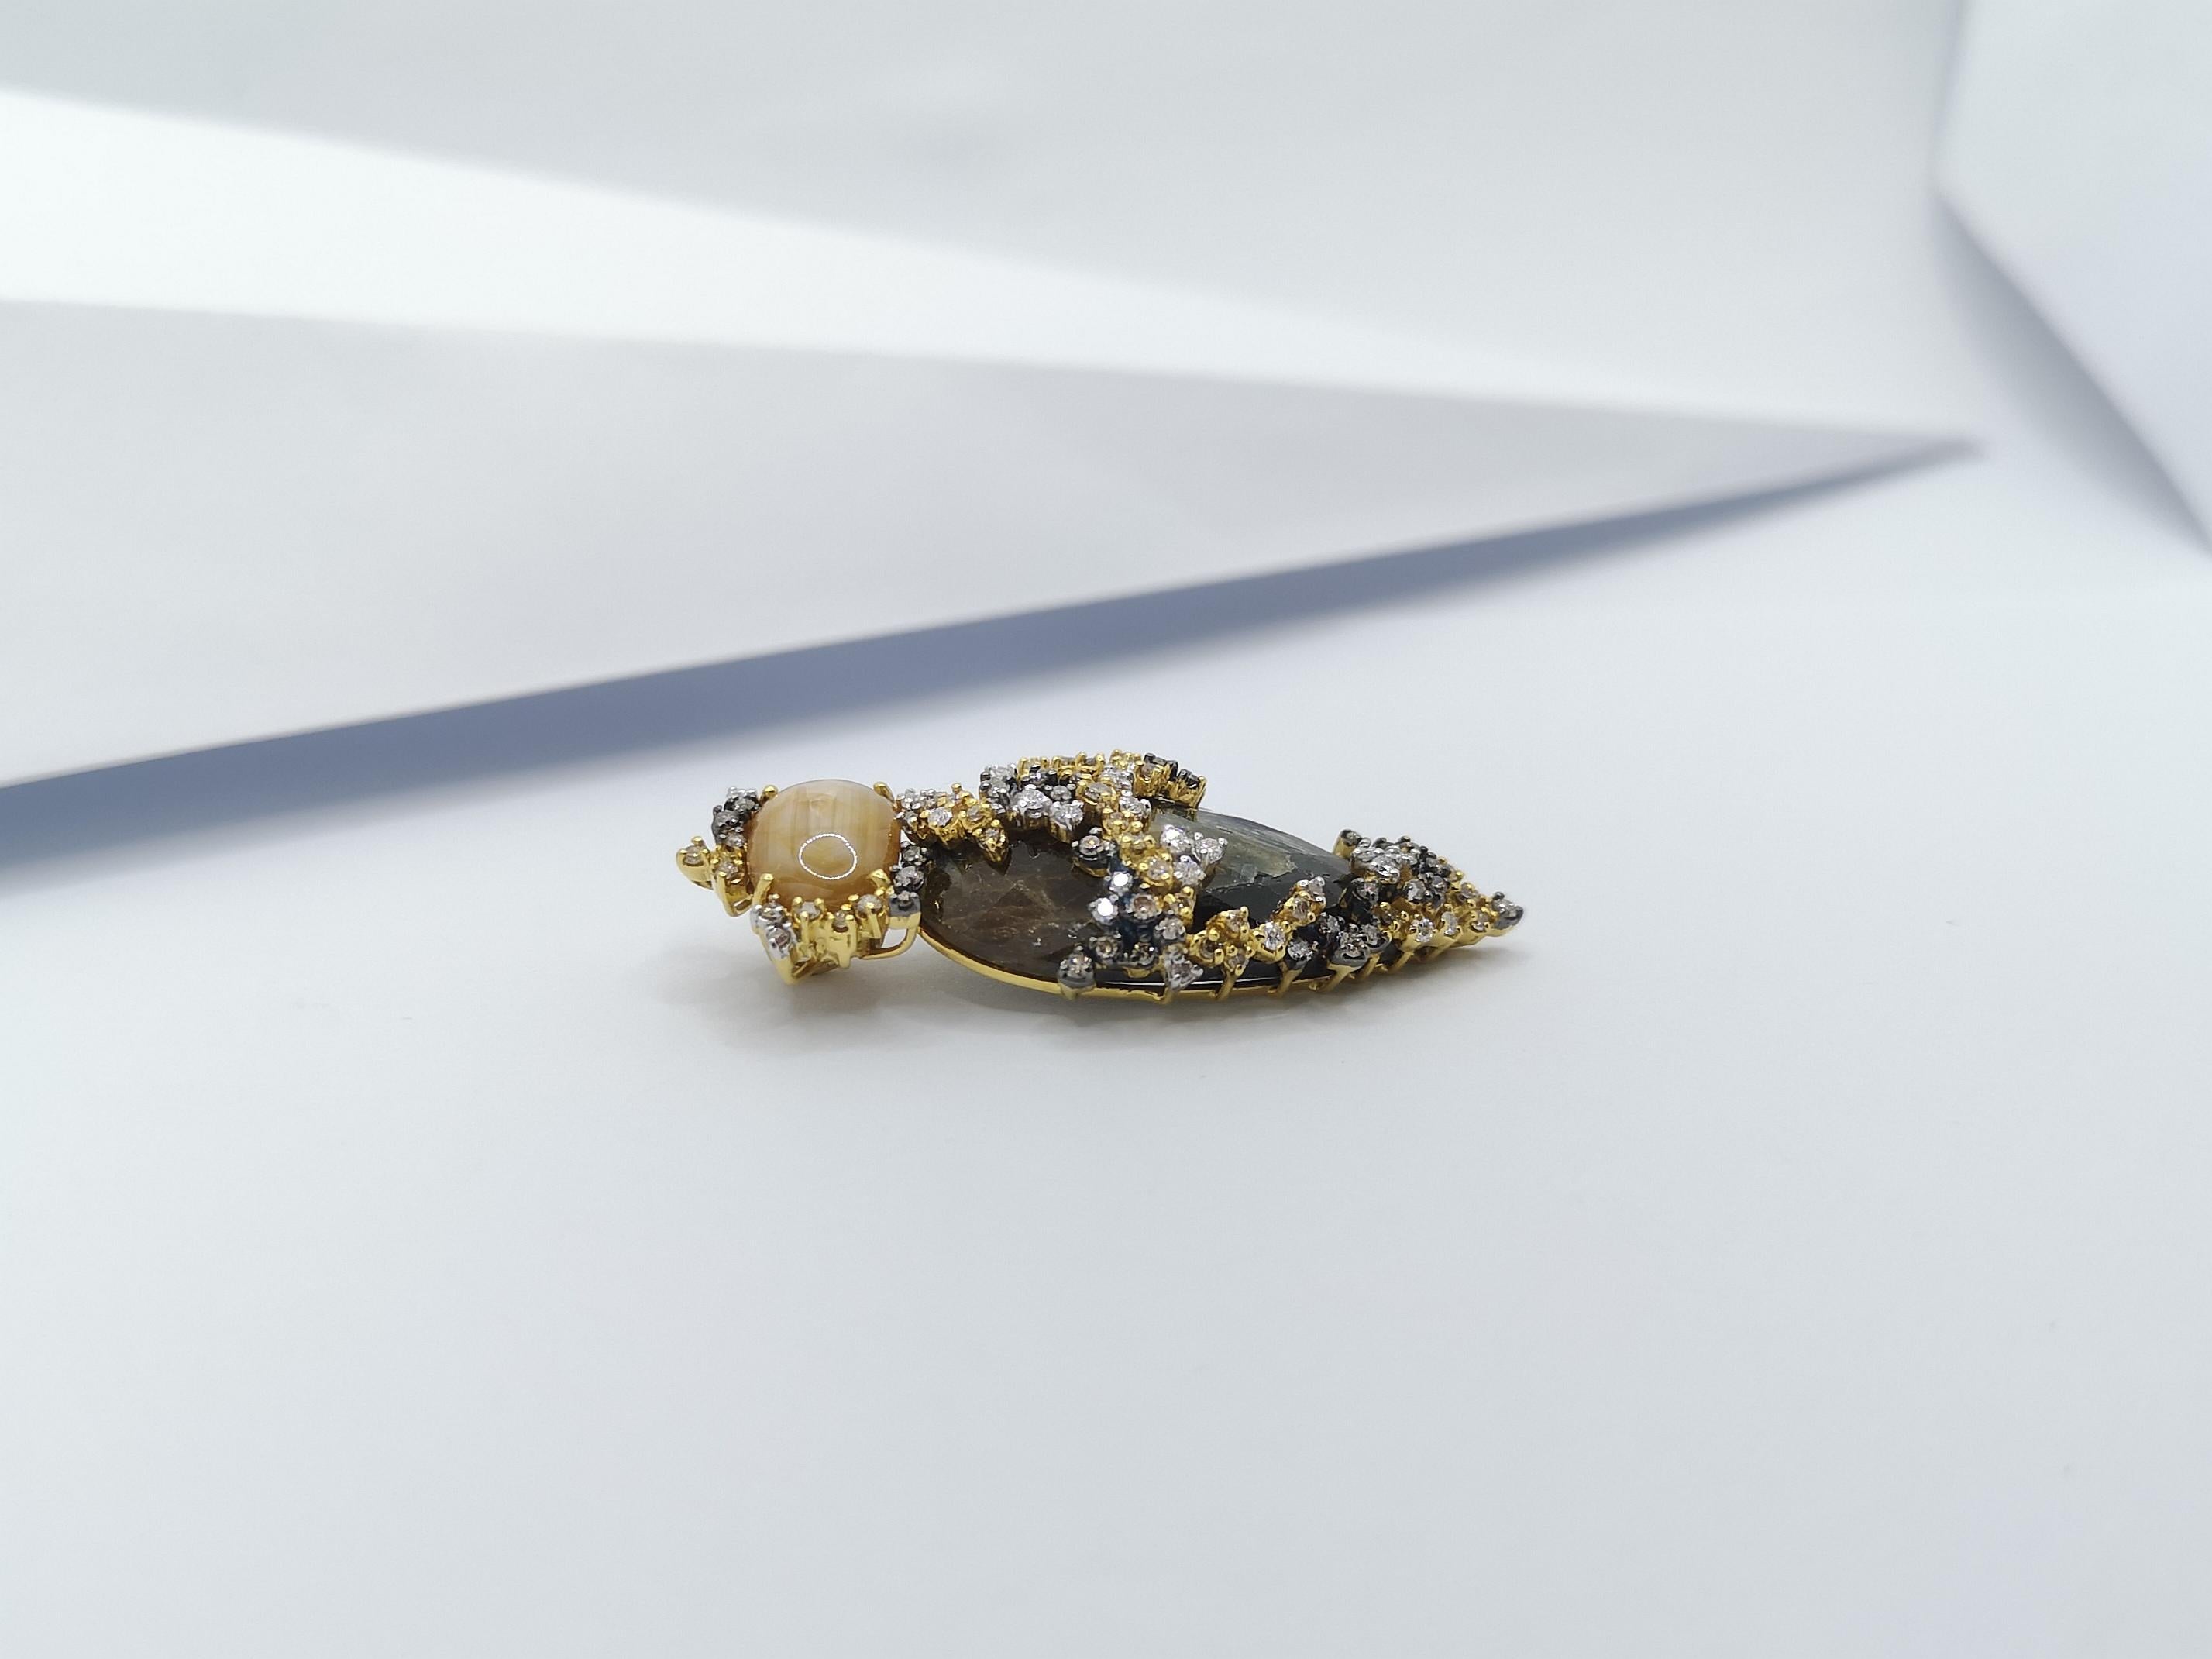 Mixed Cut Rough Sapphire, Yellow Star Sapphire, Brown Diamond Pendant Set in 18 Karat Gold For Sale